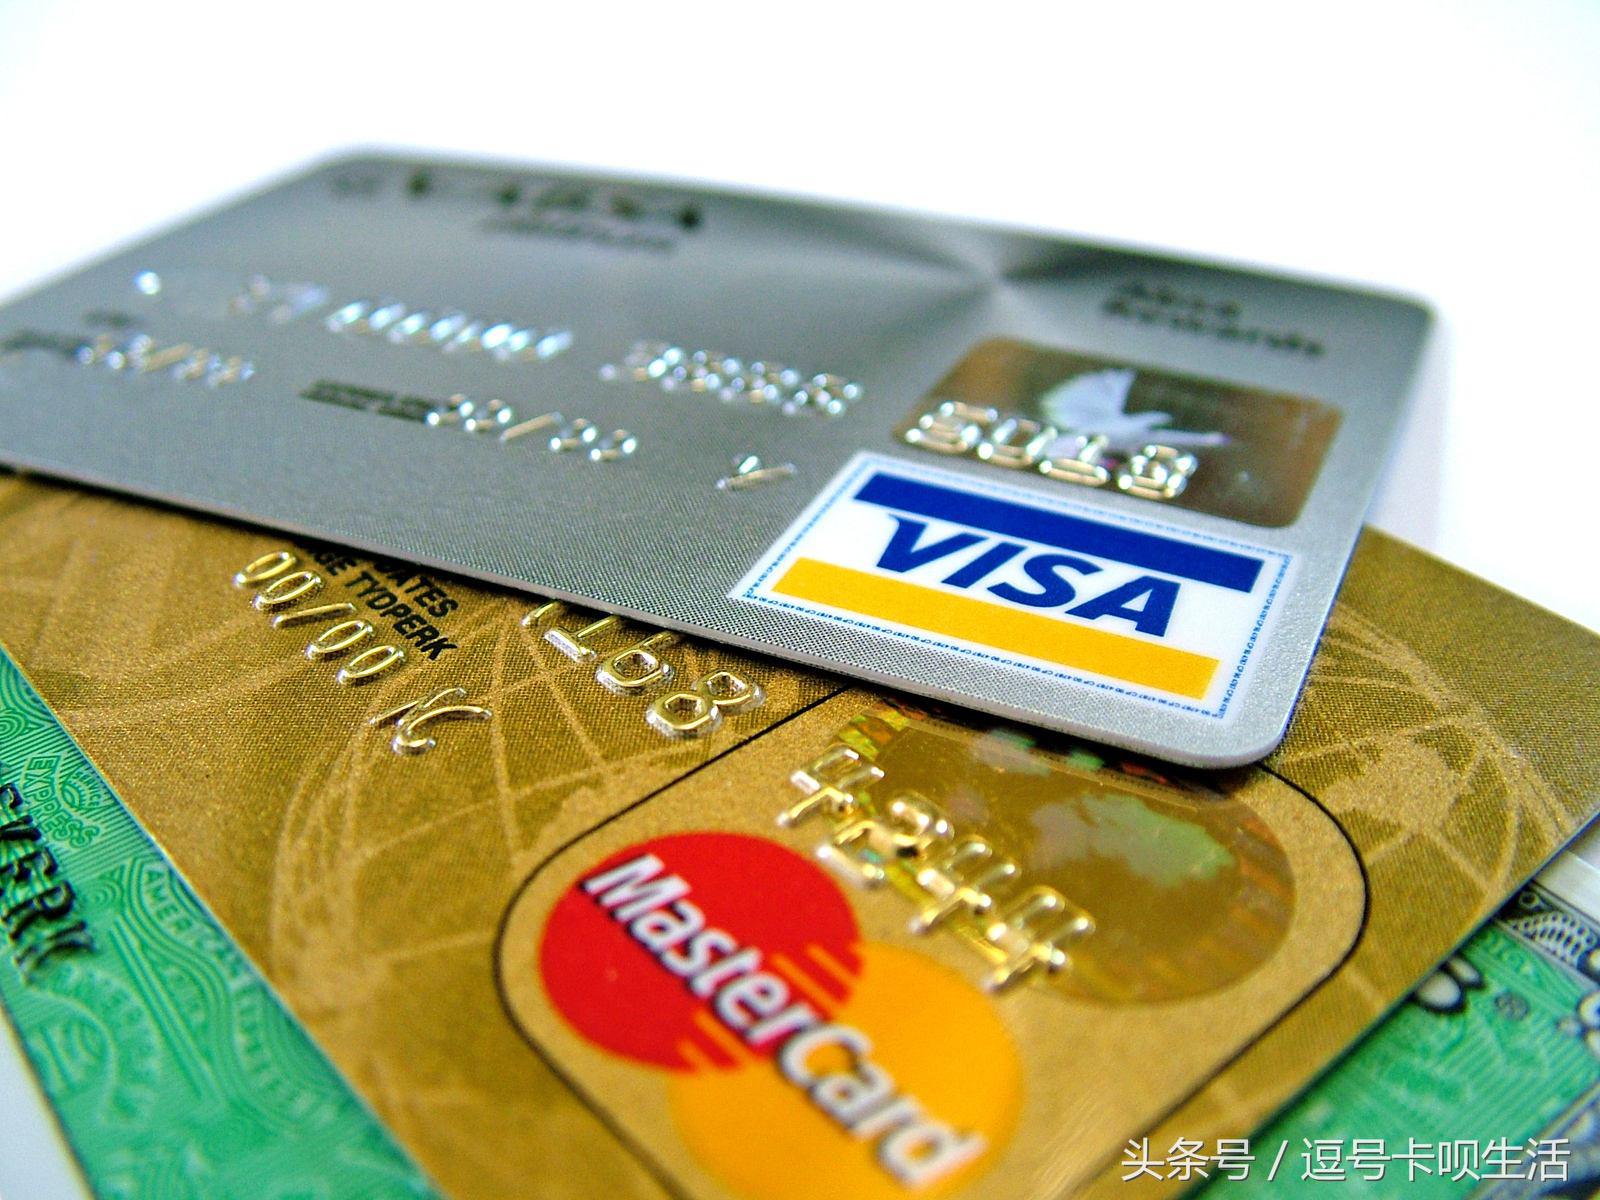 master卡和visa卡的区别是什么？办理两类信用卡的区别及优势比较